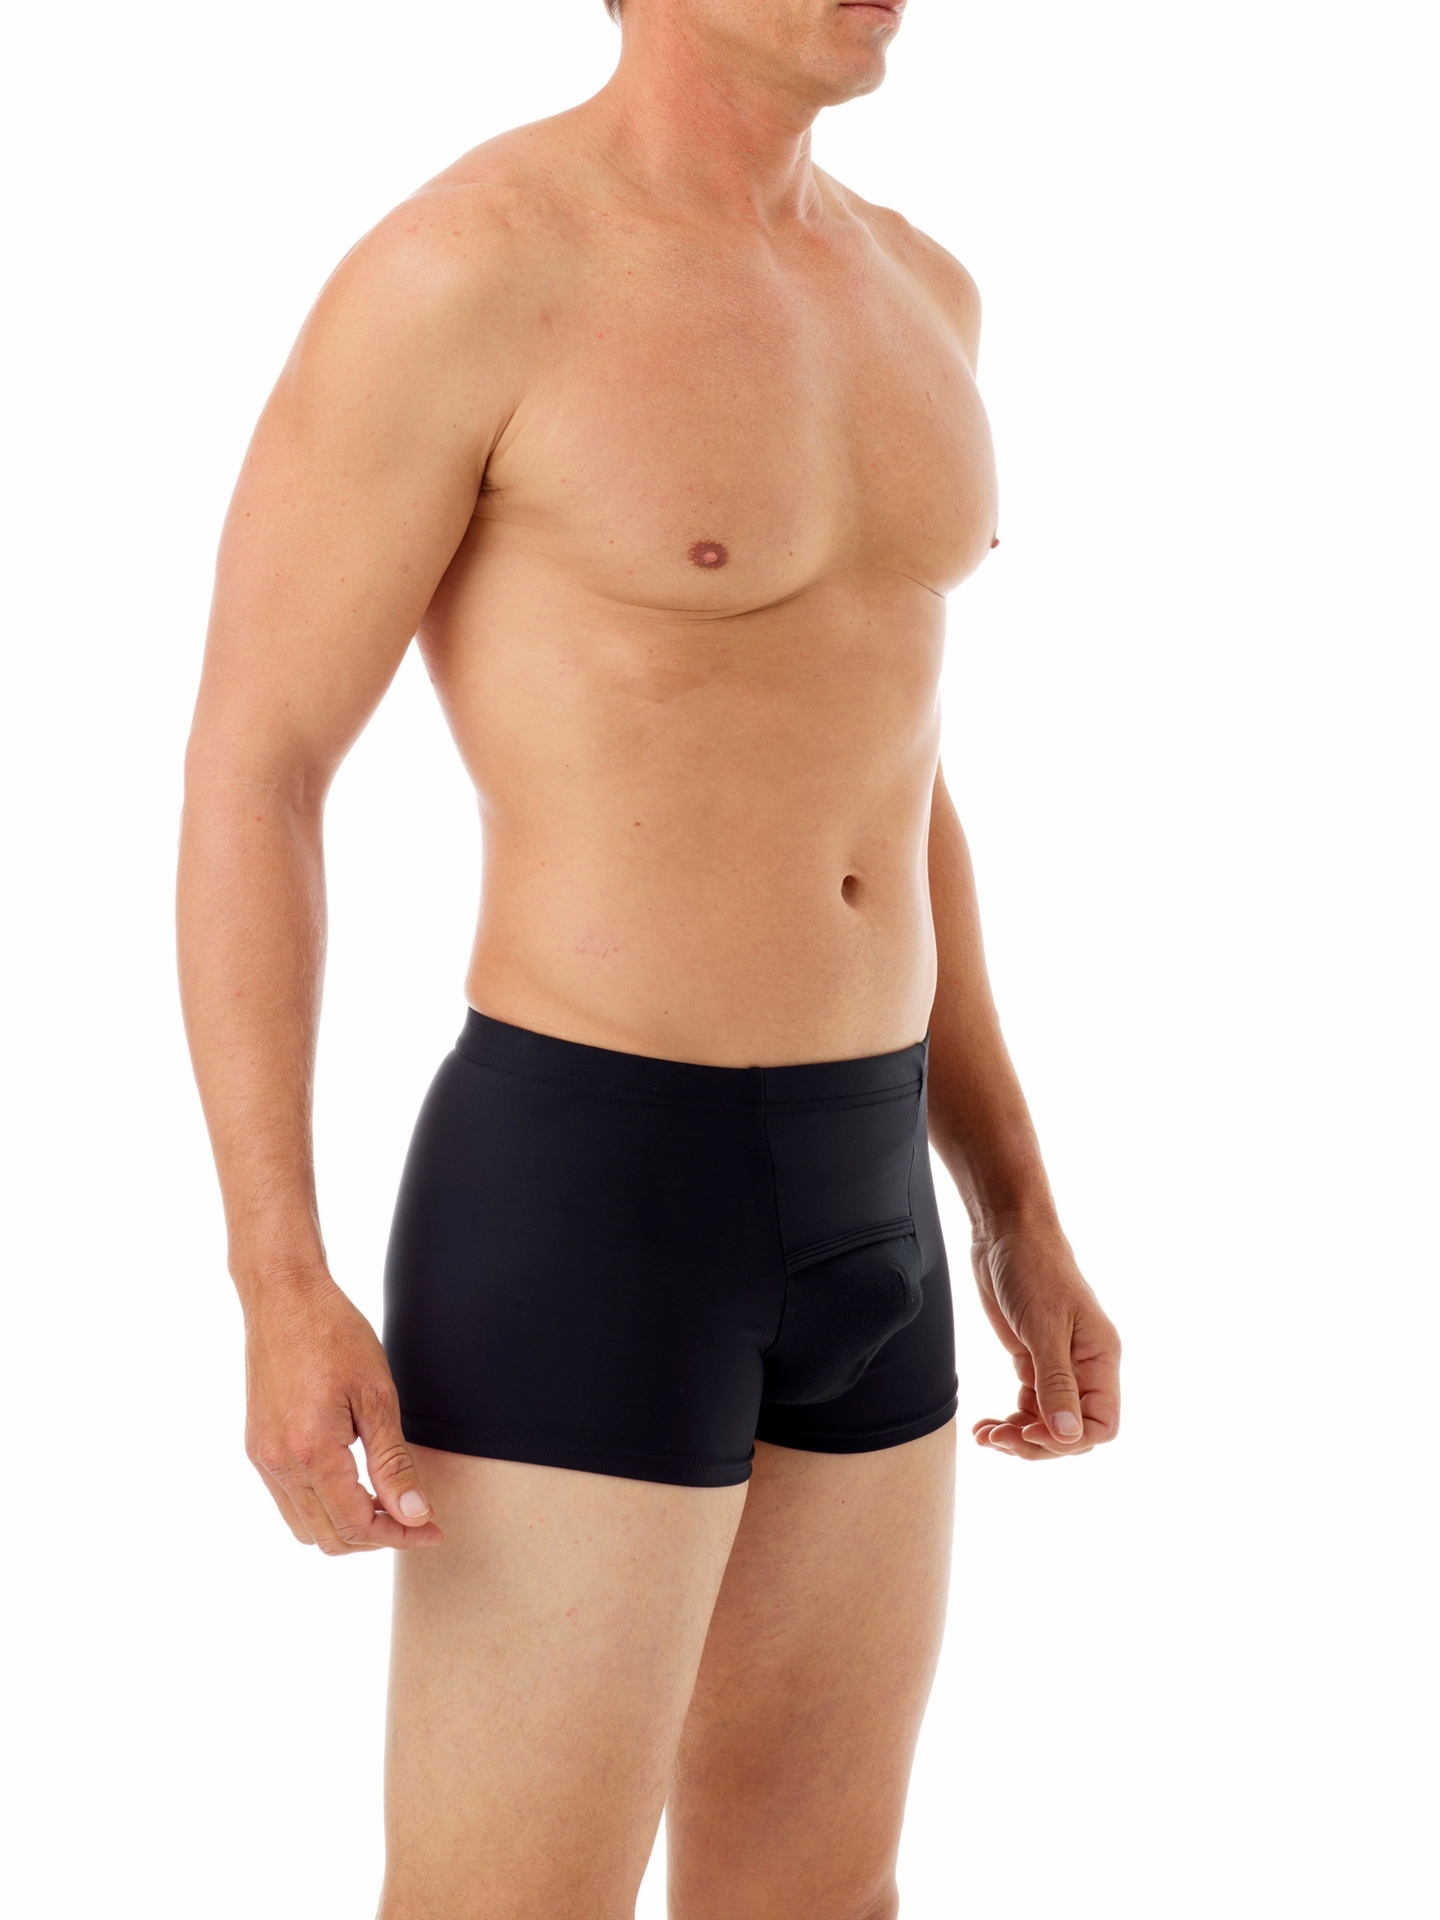 Underworks 3-Inch Slip-on Brief Girdle for Men Small 28-32-Waist White at   Men's Clothing store: Athletic Underwear